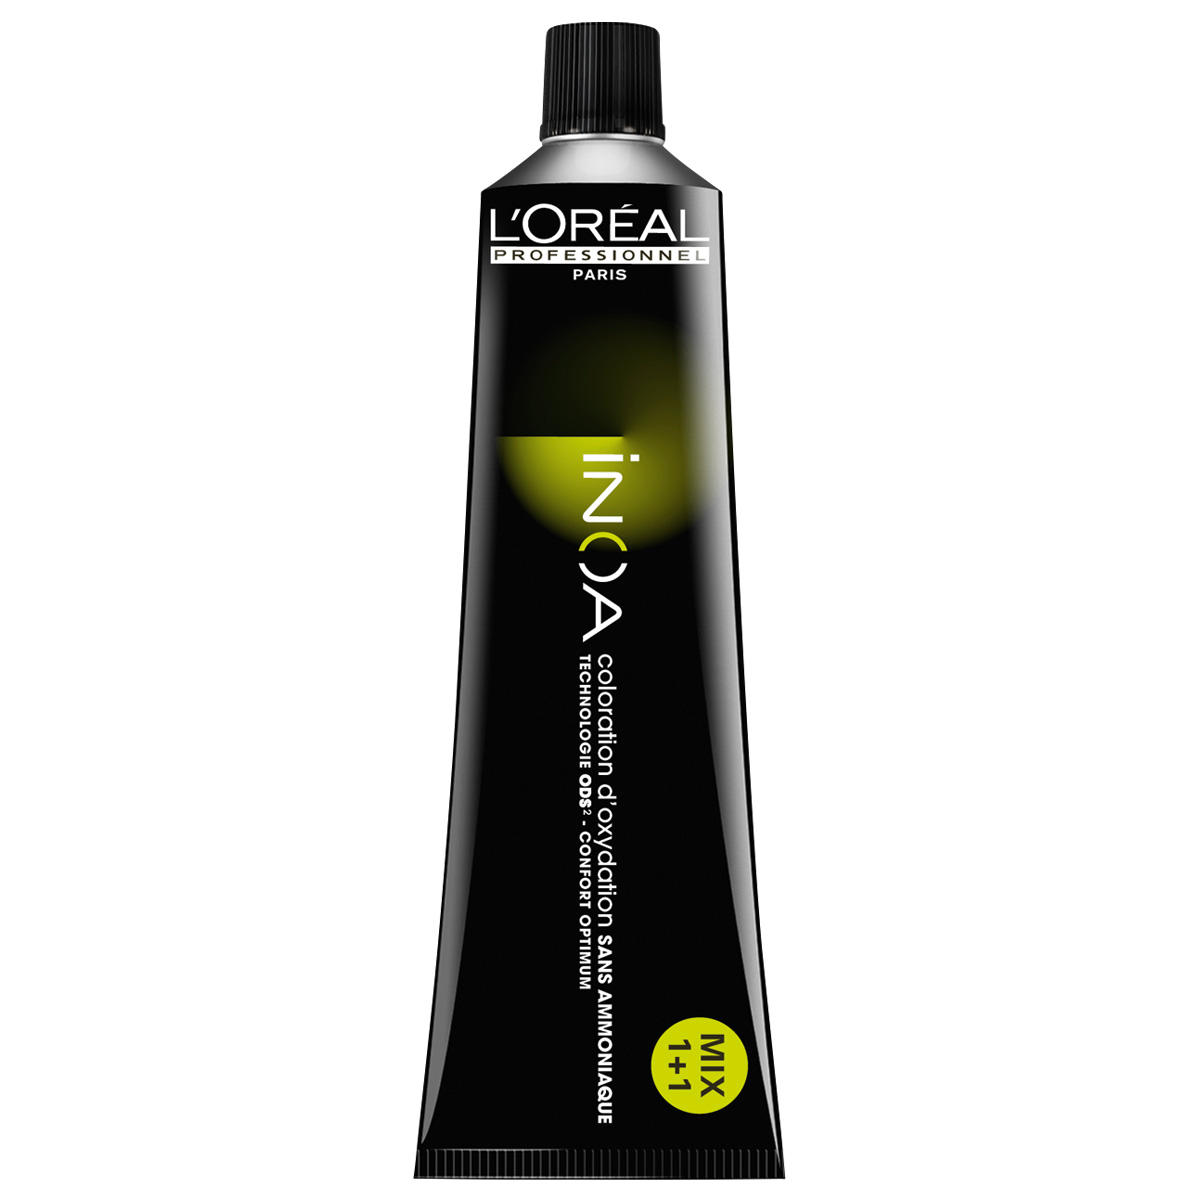 L'Oréal Professionnel Paris Coloration 10.1 Cenere bionda platino, tubo 60 ml